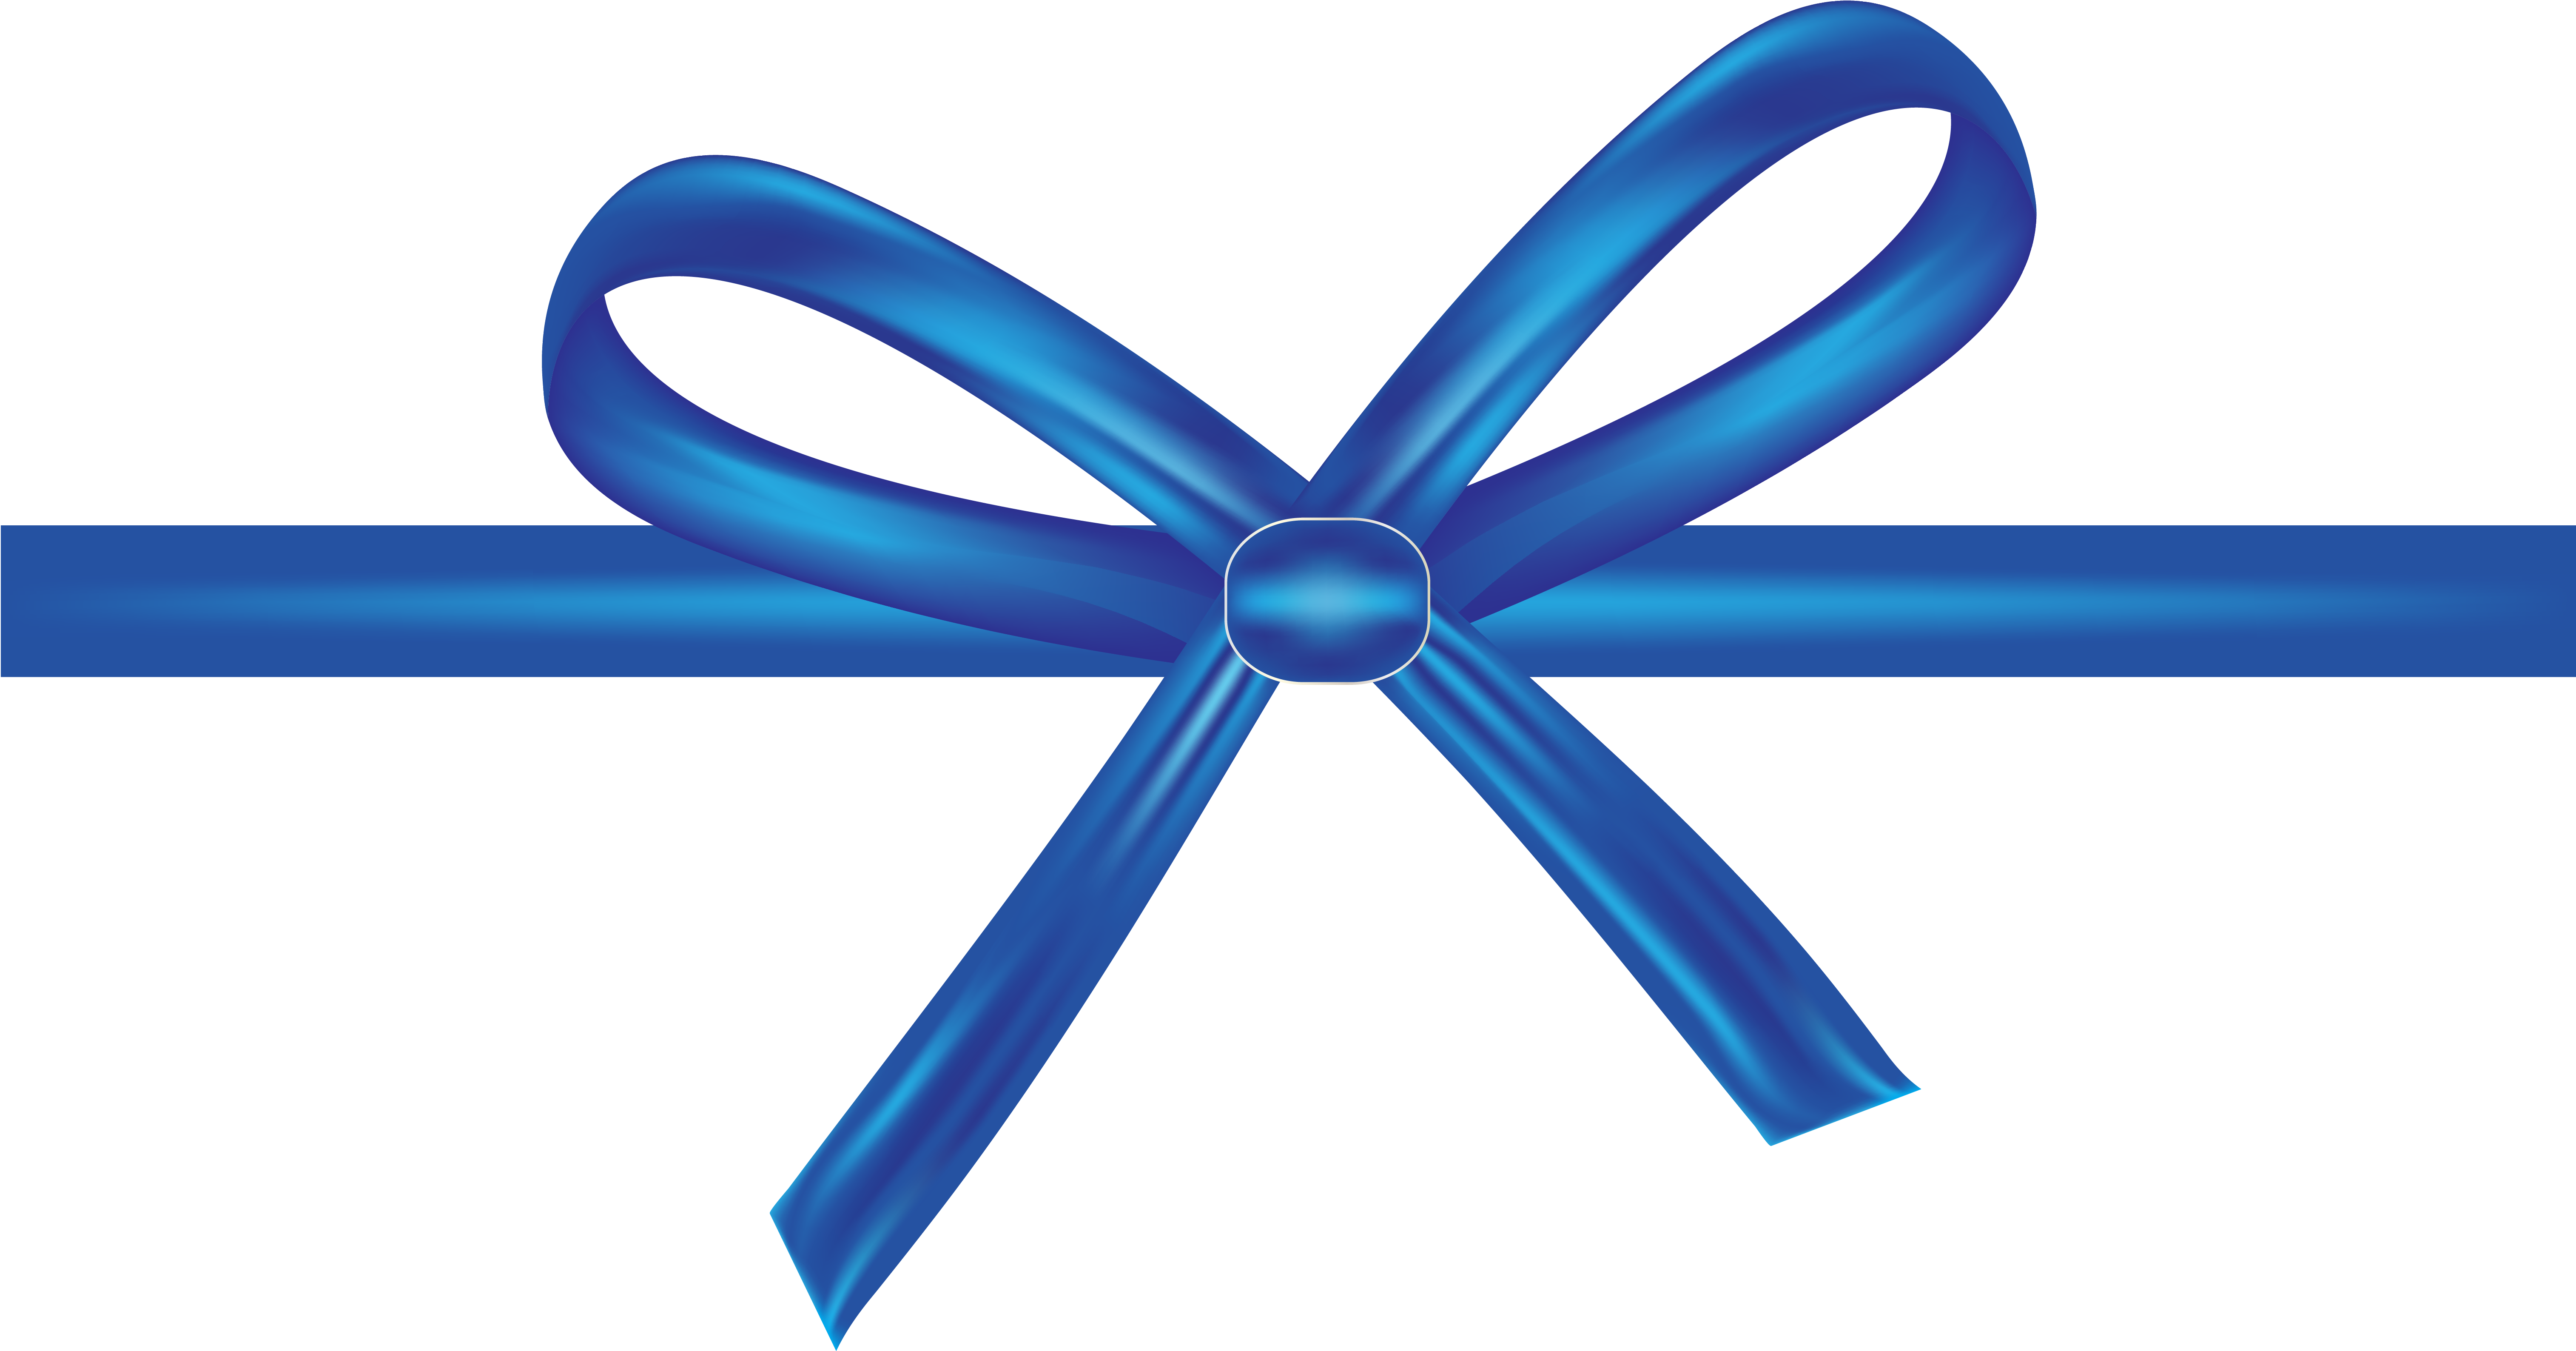 Shoelace Knot Blue Ribbon Bow Tie Ribbon Bow